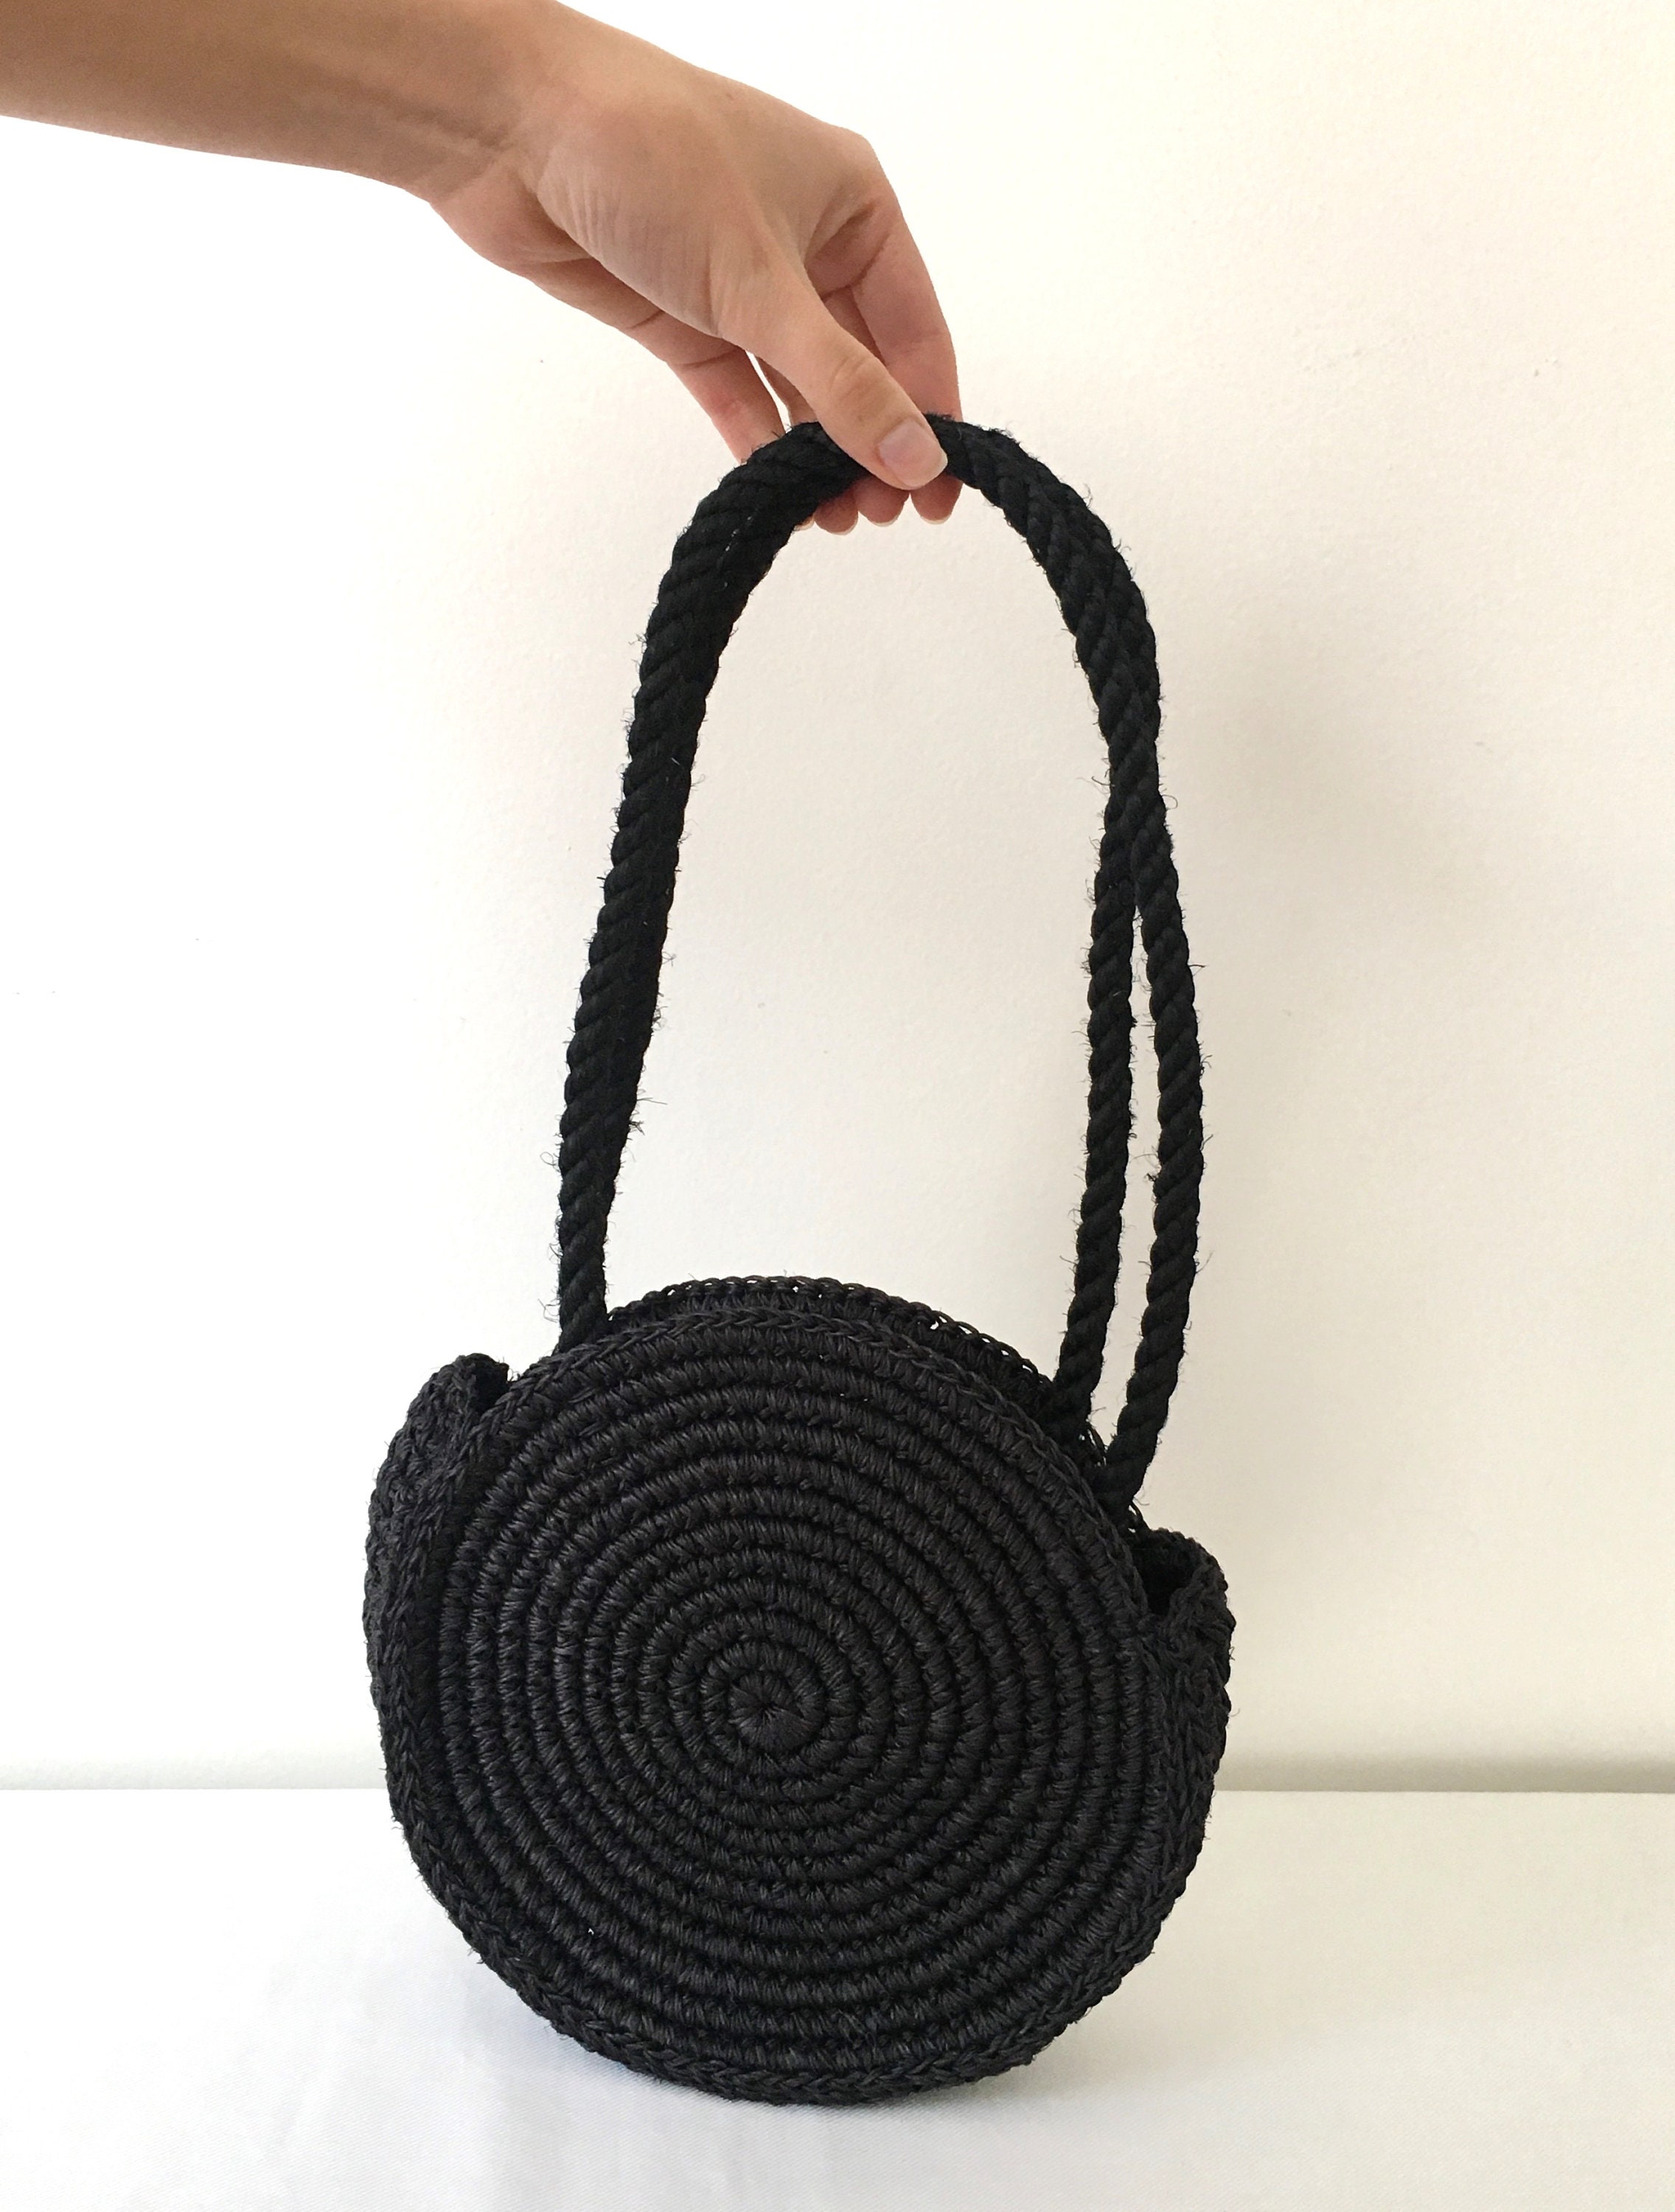 Mini Black Round Straw Raffia Handbag Market Shoulder Bag | Etsy